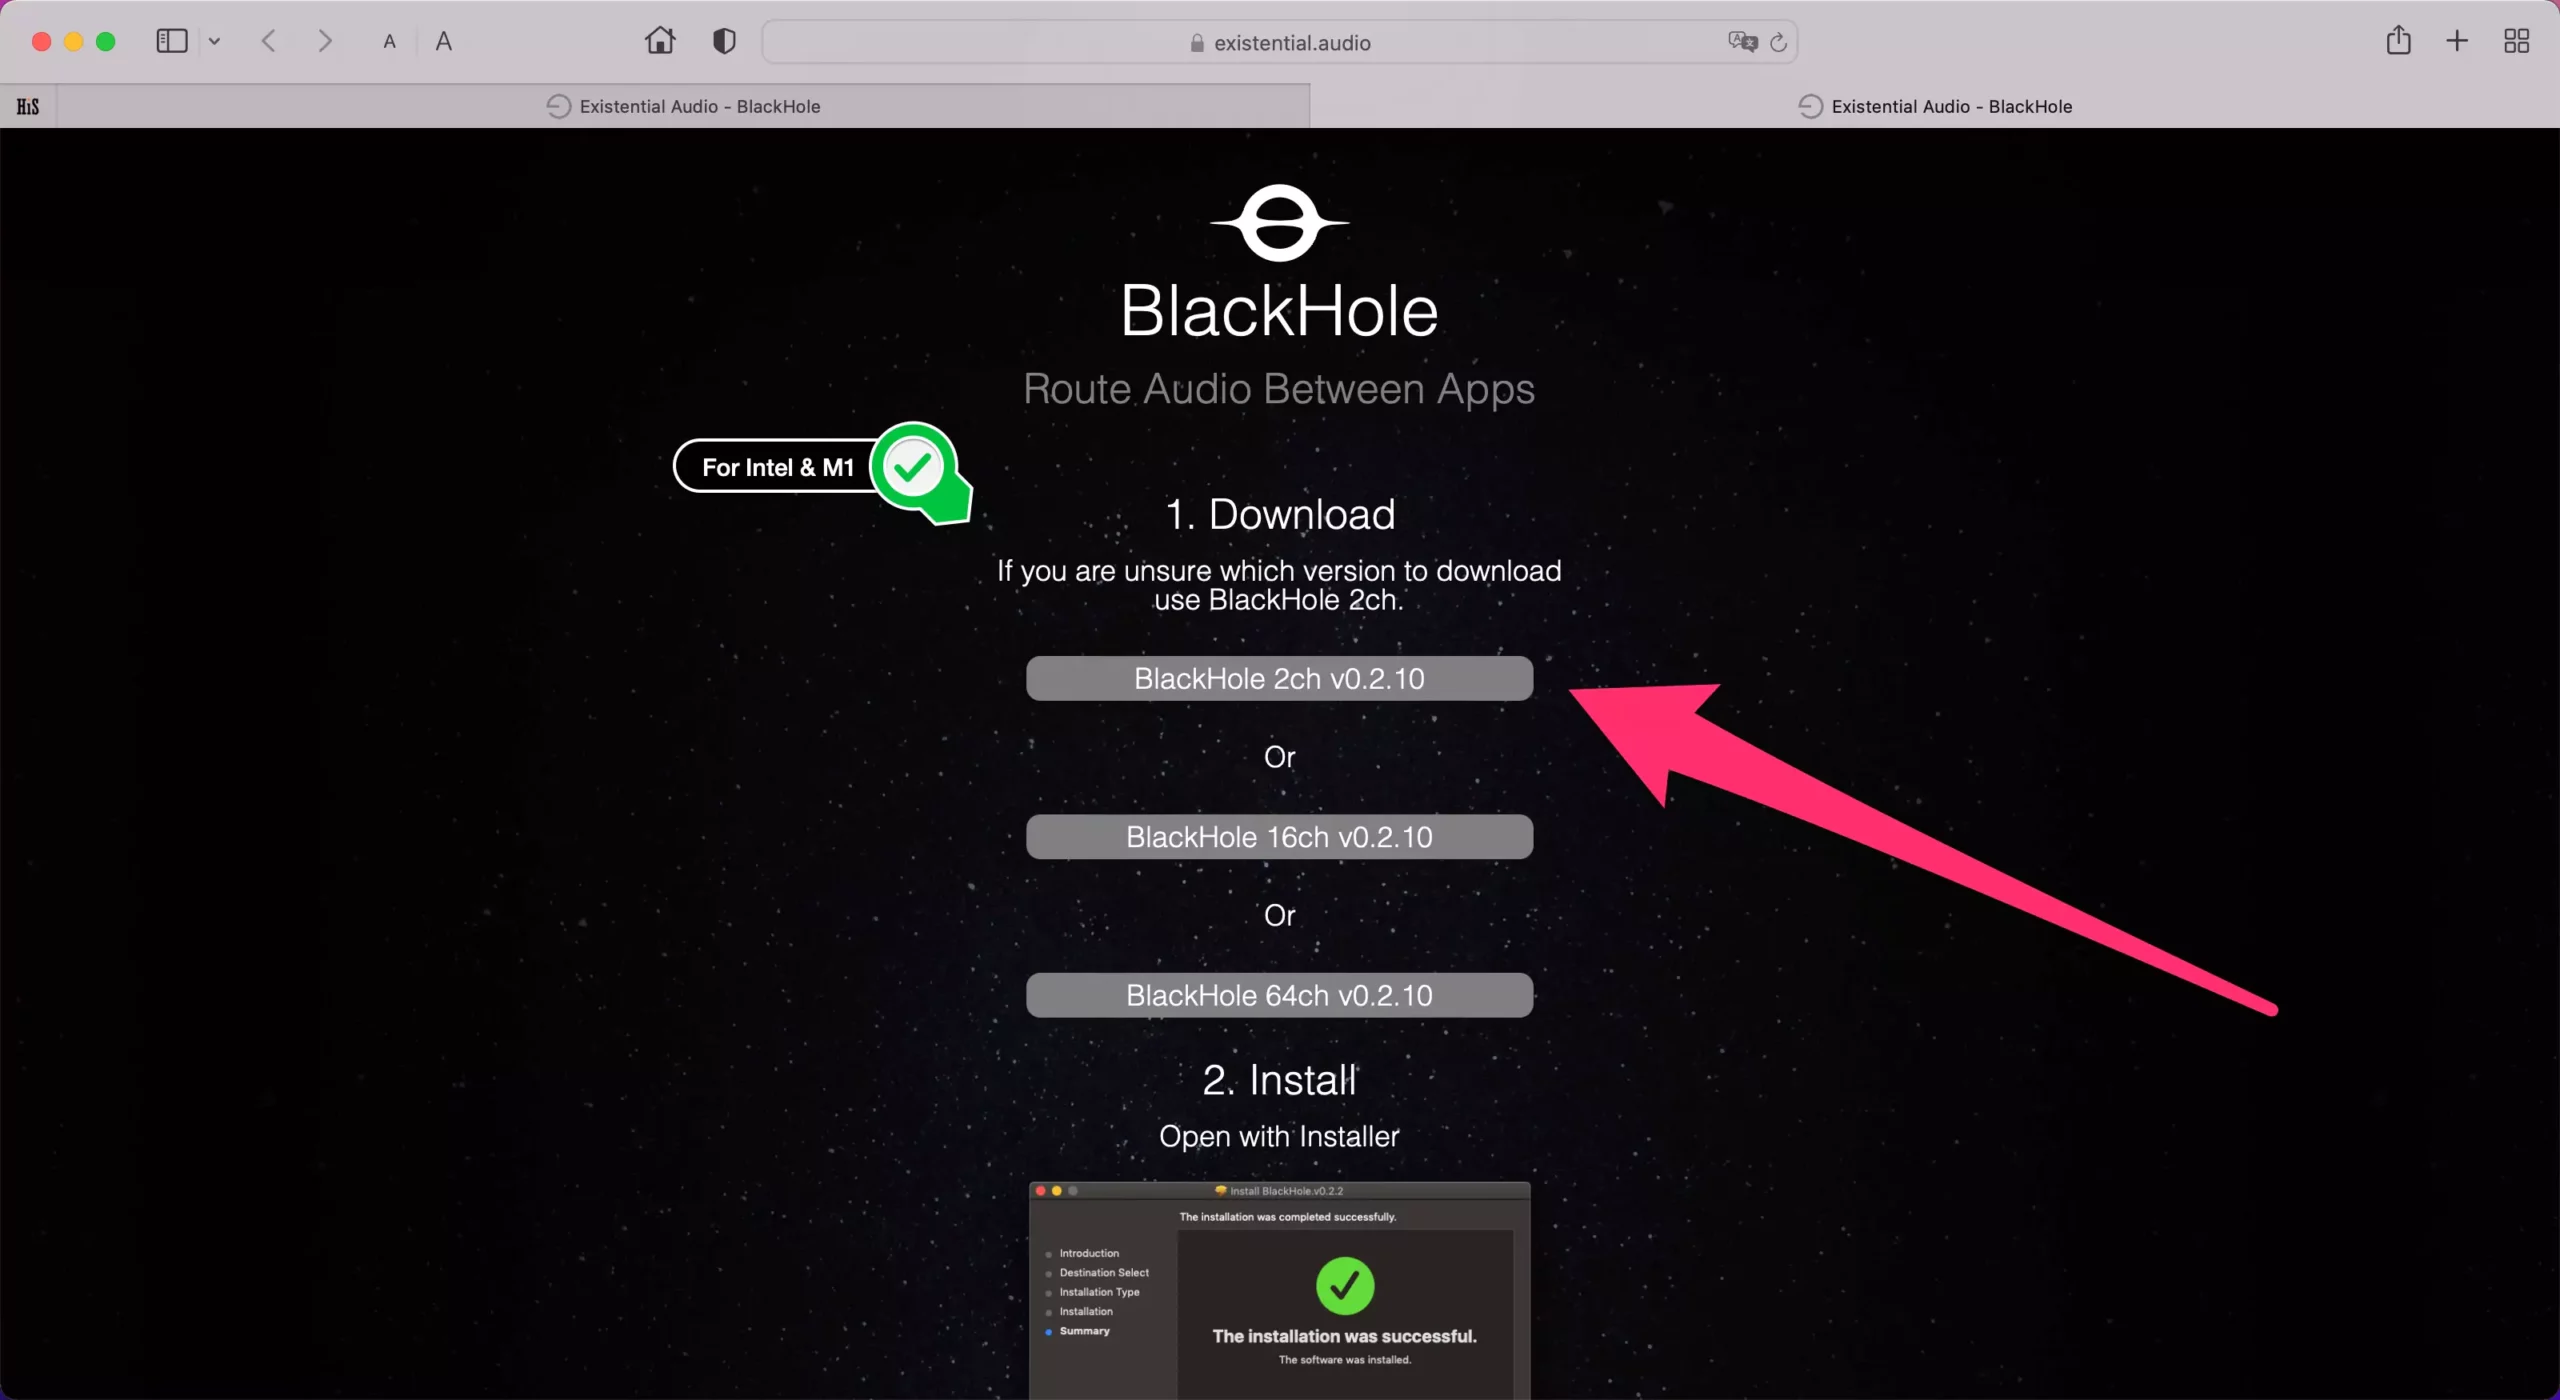 download-blackhole-software-for-intel-or-m1-mac